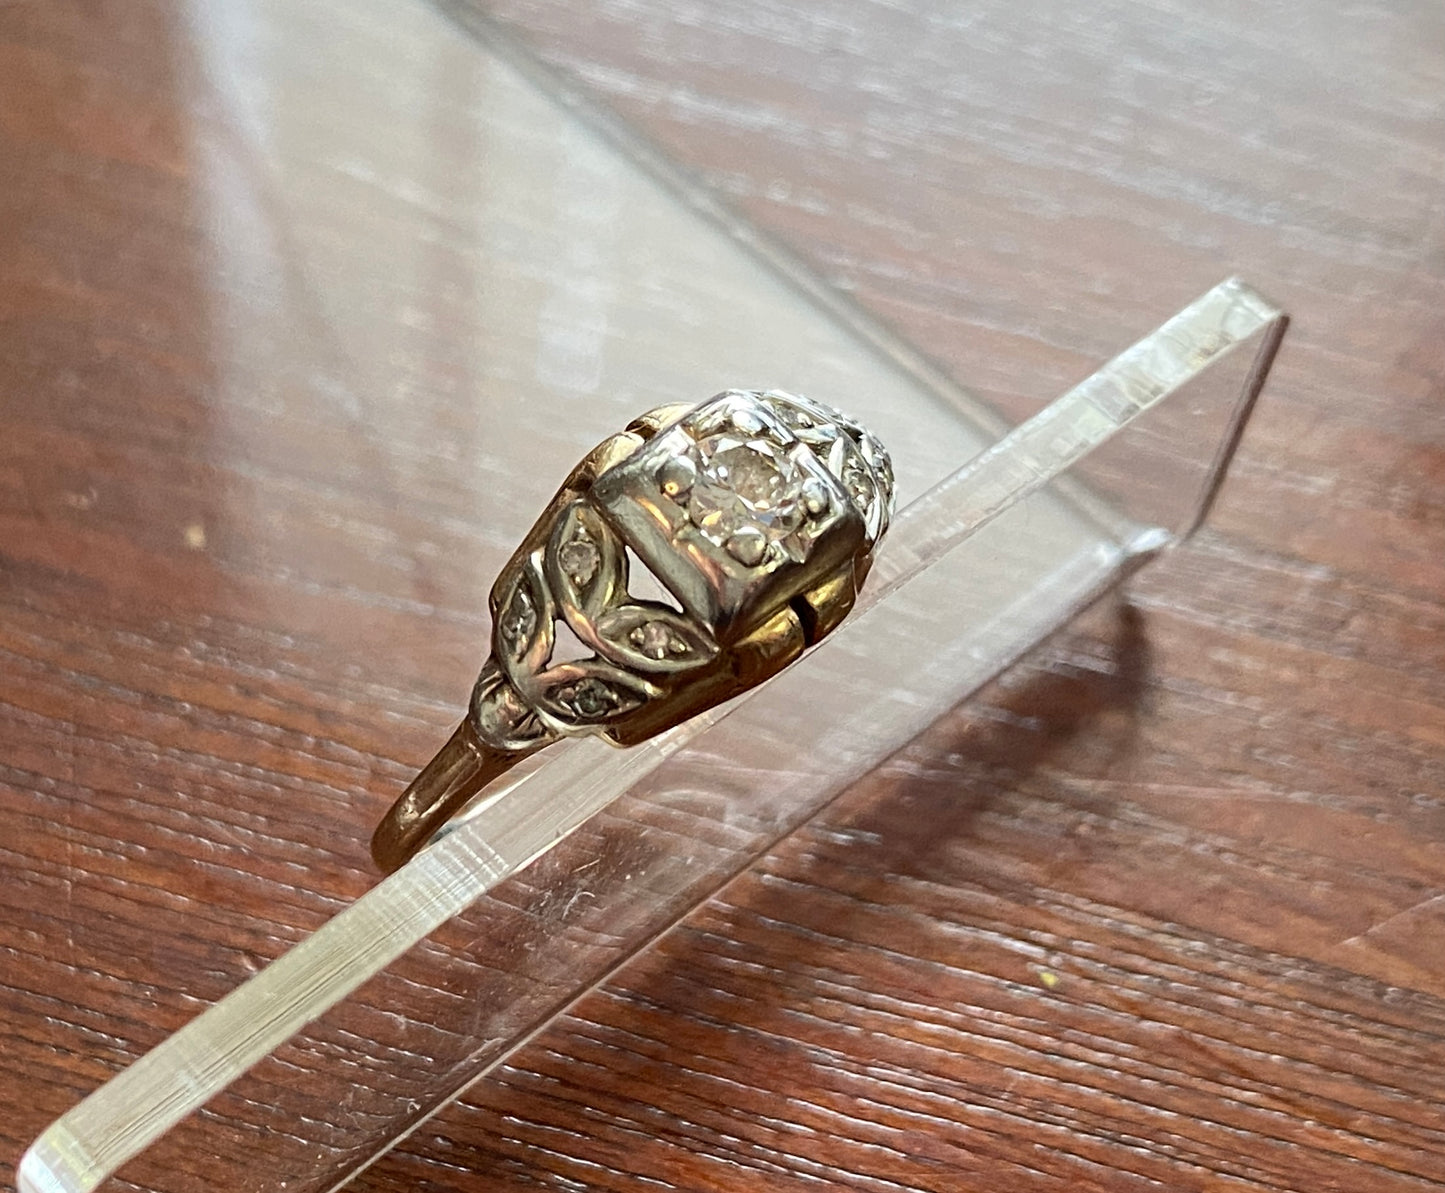 Vintage 10k Yellow Gold .25ctw Diamond Engagement Ring Sz 5.75